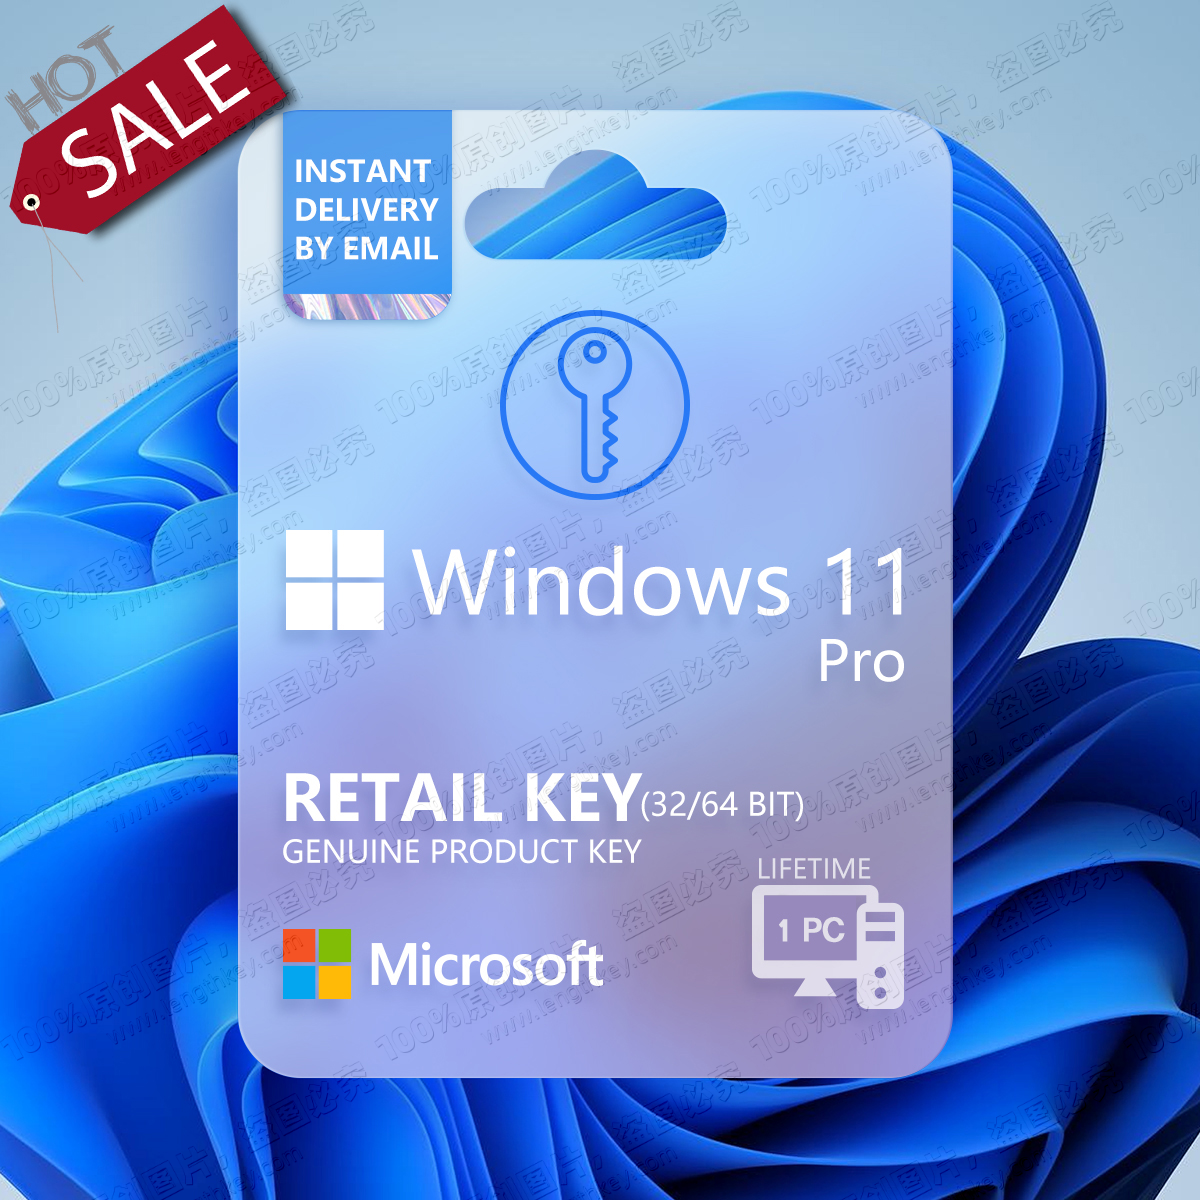 247 Online Instant Email Delivery Windows 11 Pro Retailoemmak Key Online Activation Genuine 0164